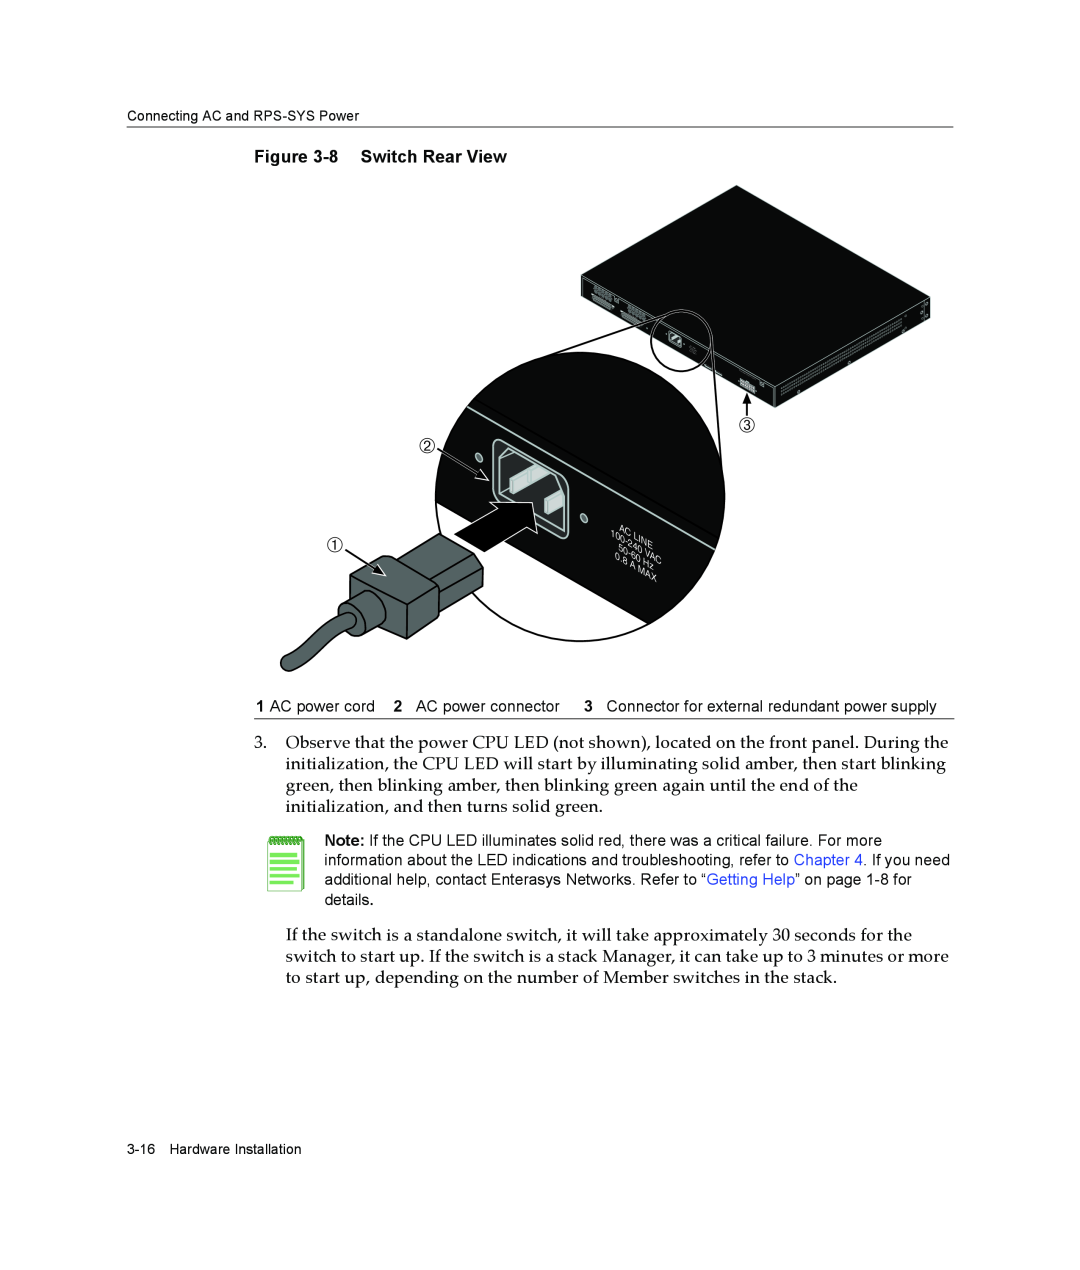 Enterasys Networks B2G124-24 manual 8 Switch Rear View 